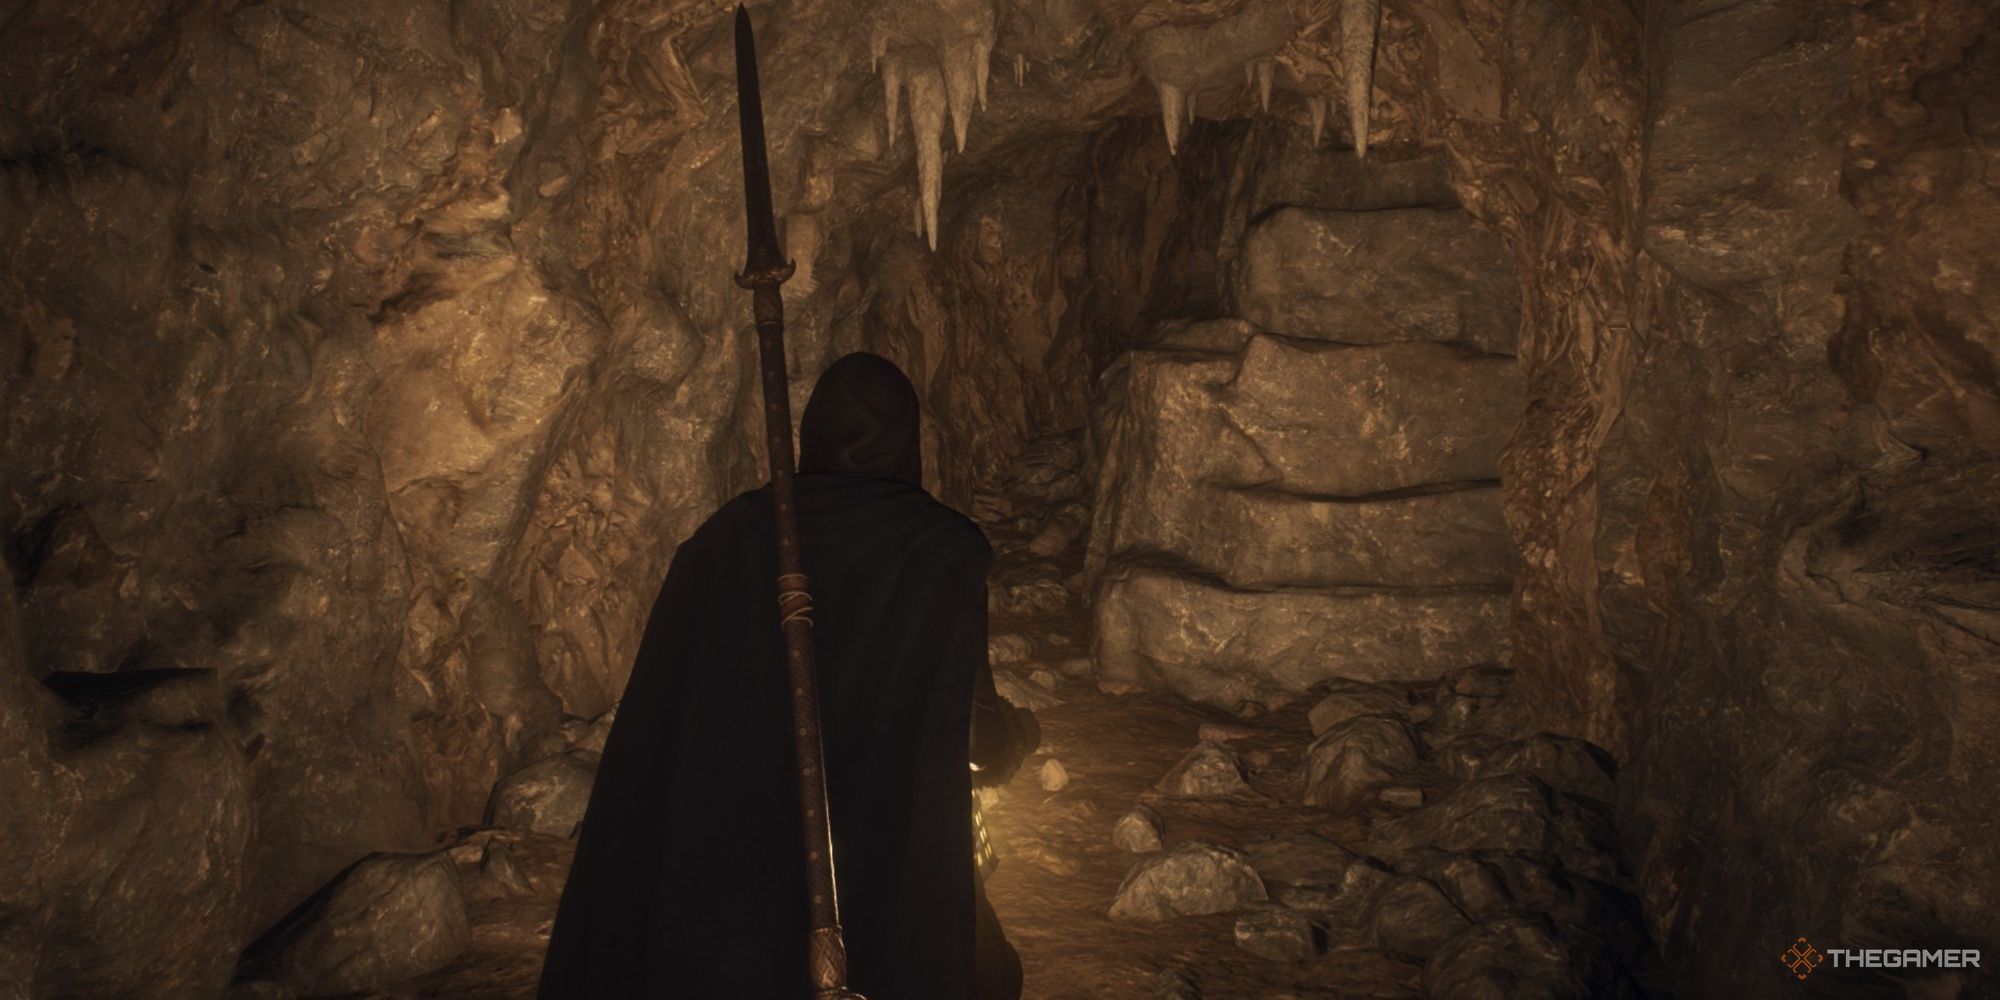 Mystic Spearhand Arisen walking through a cave illuminated by their lantern